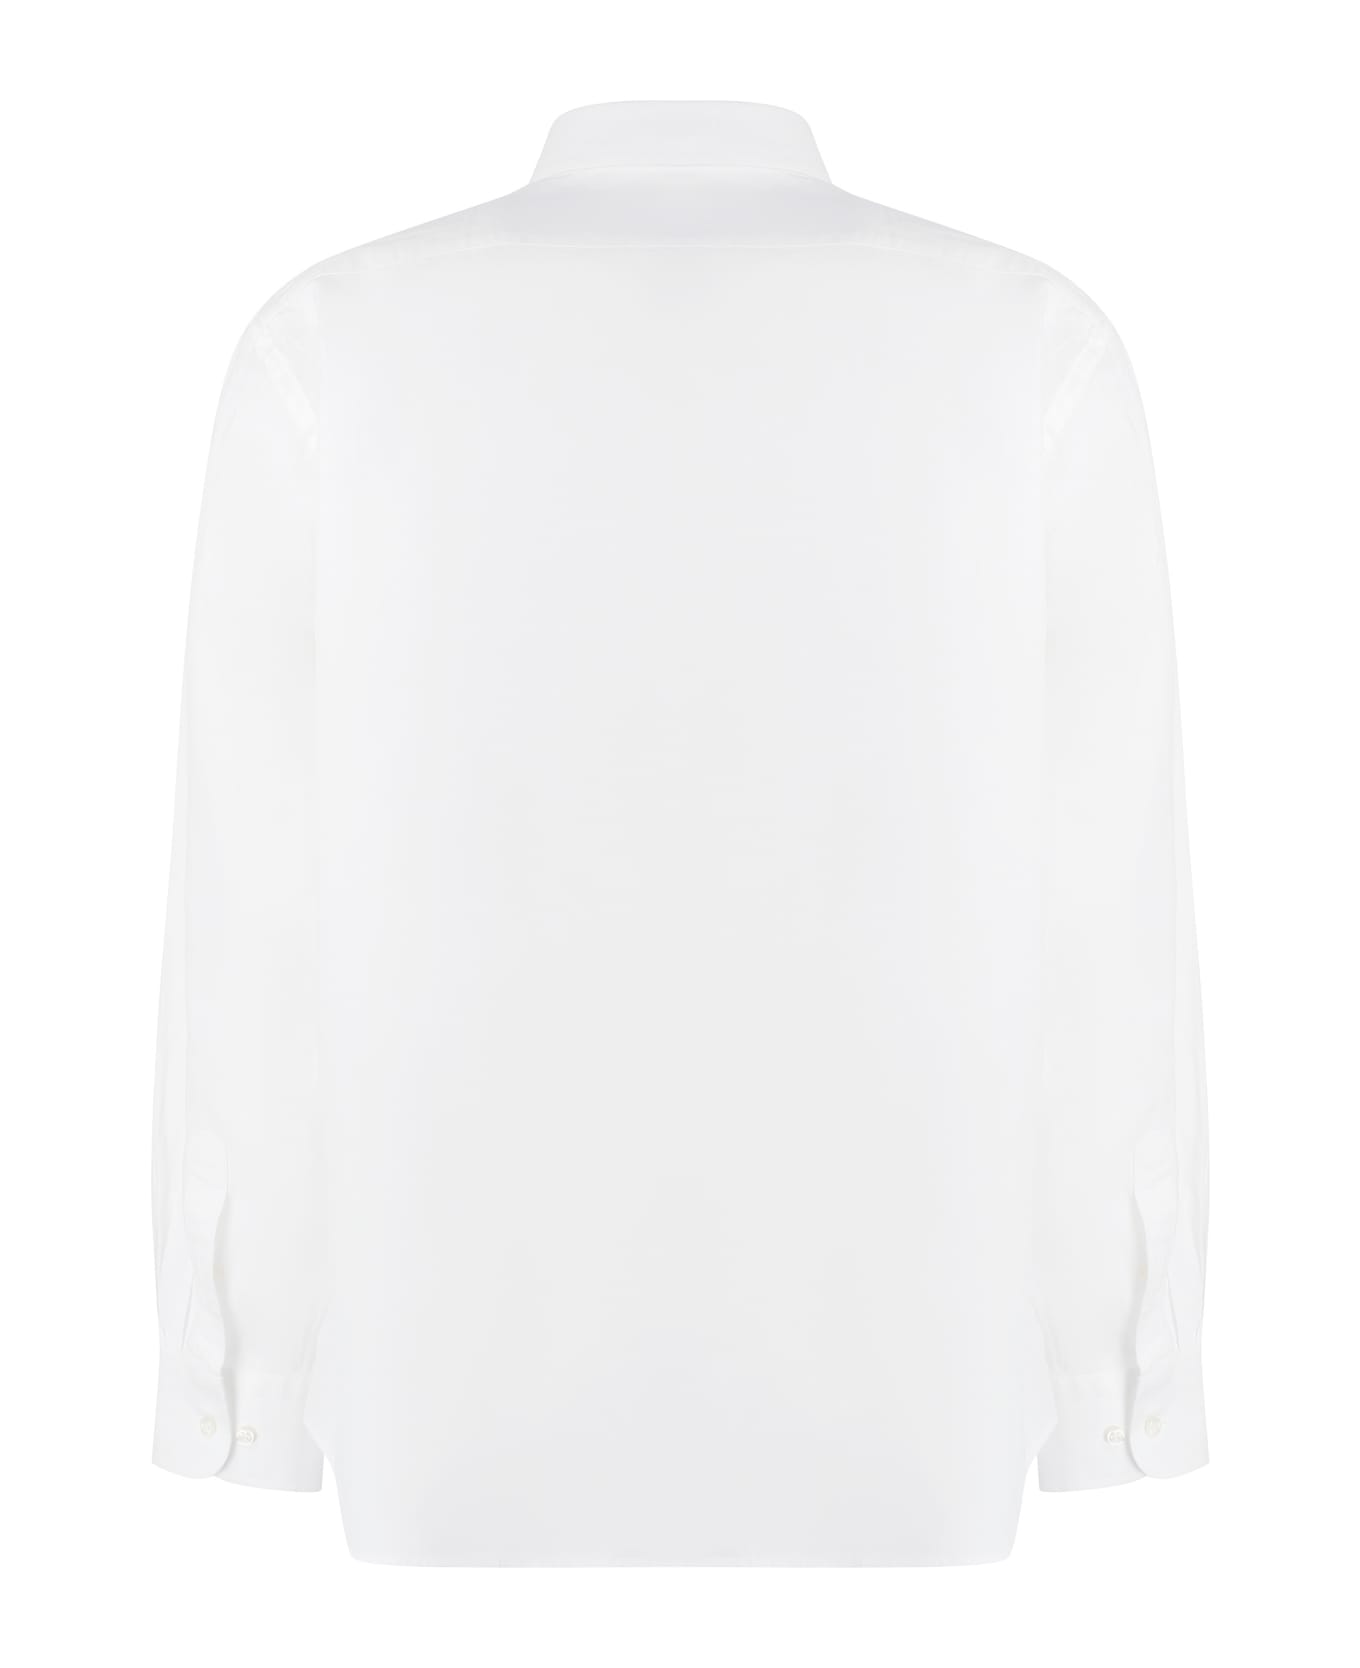 Paul&Shark Long Sleeve Cotton Blend Shirt - White シャツ